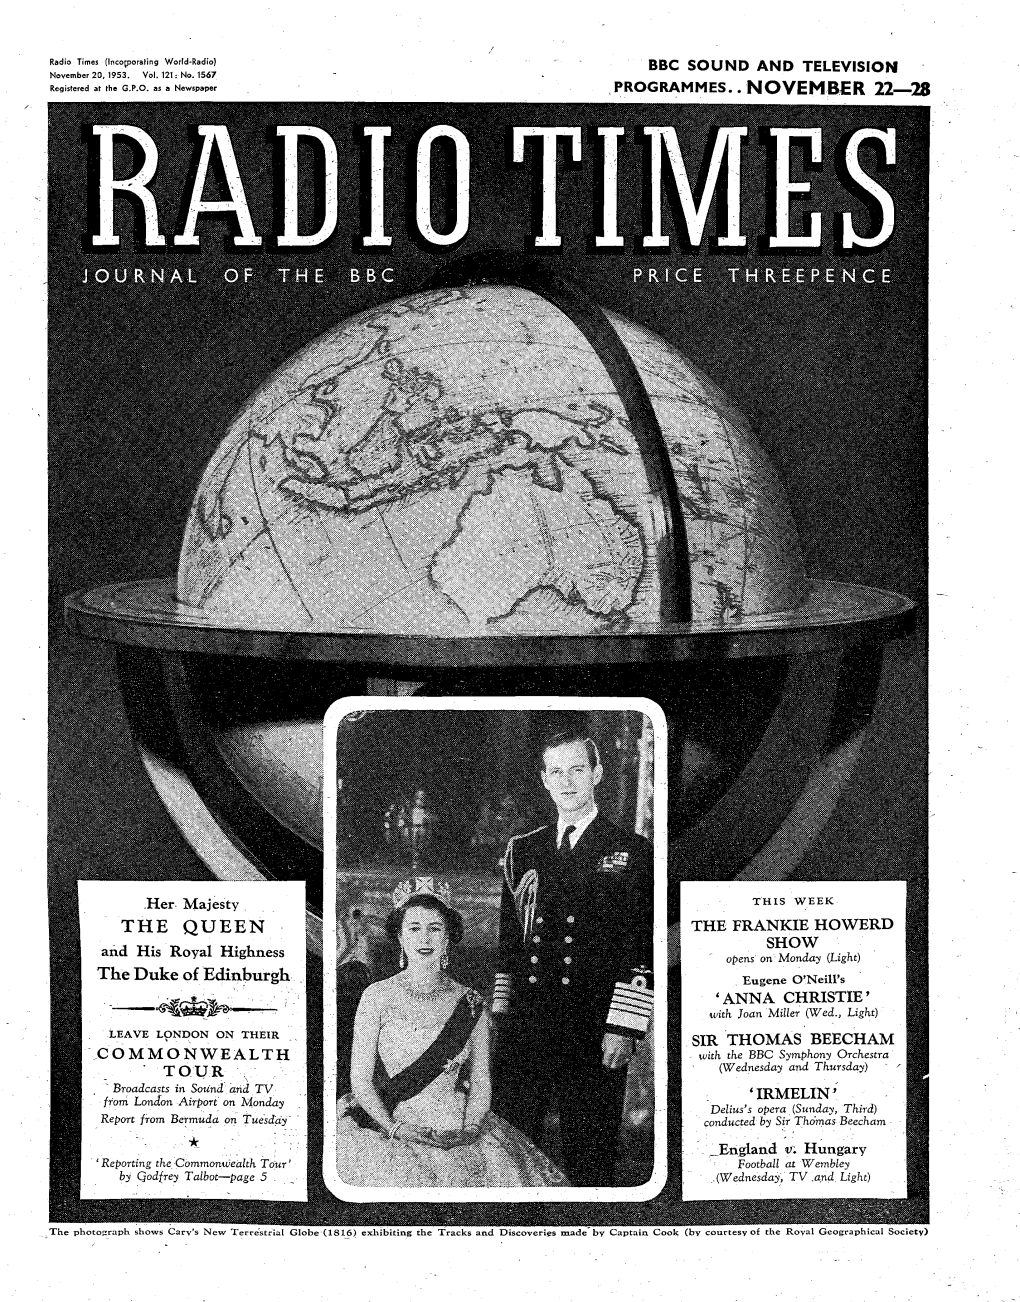 Radio Times, November 20, 1953